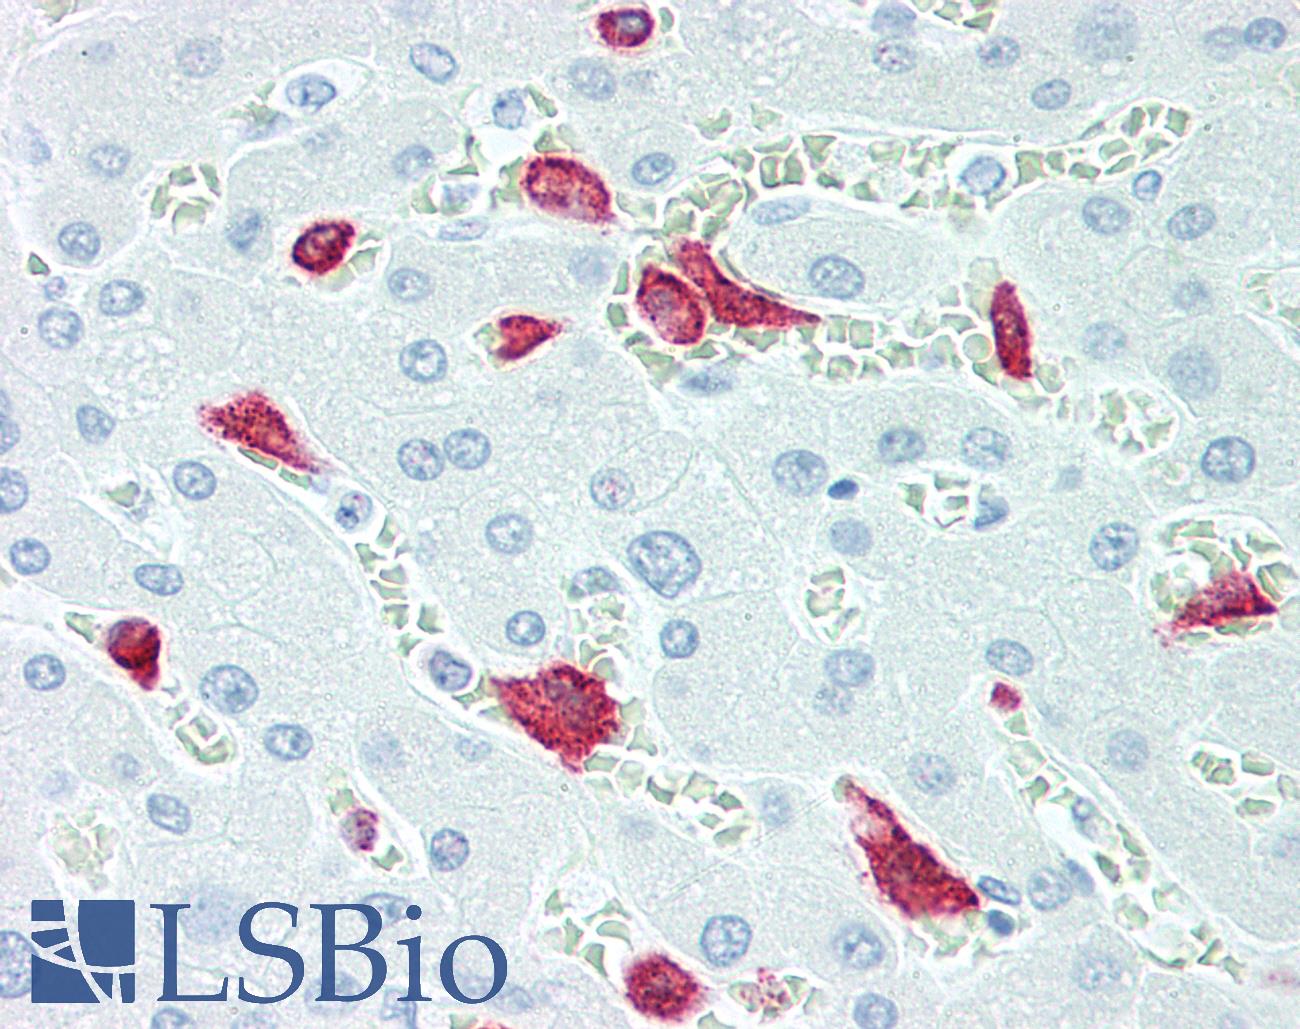 CD163 Antibody - Human Liver, Kupffer cells: Formalin-Fixed, Paraffin-Embedded (FFPE)